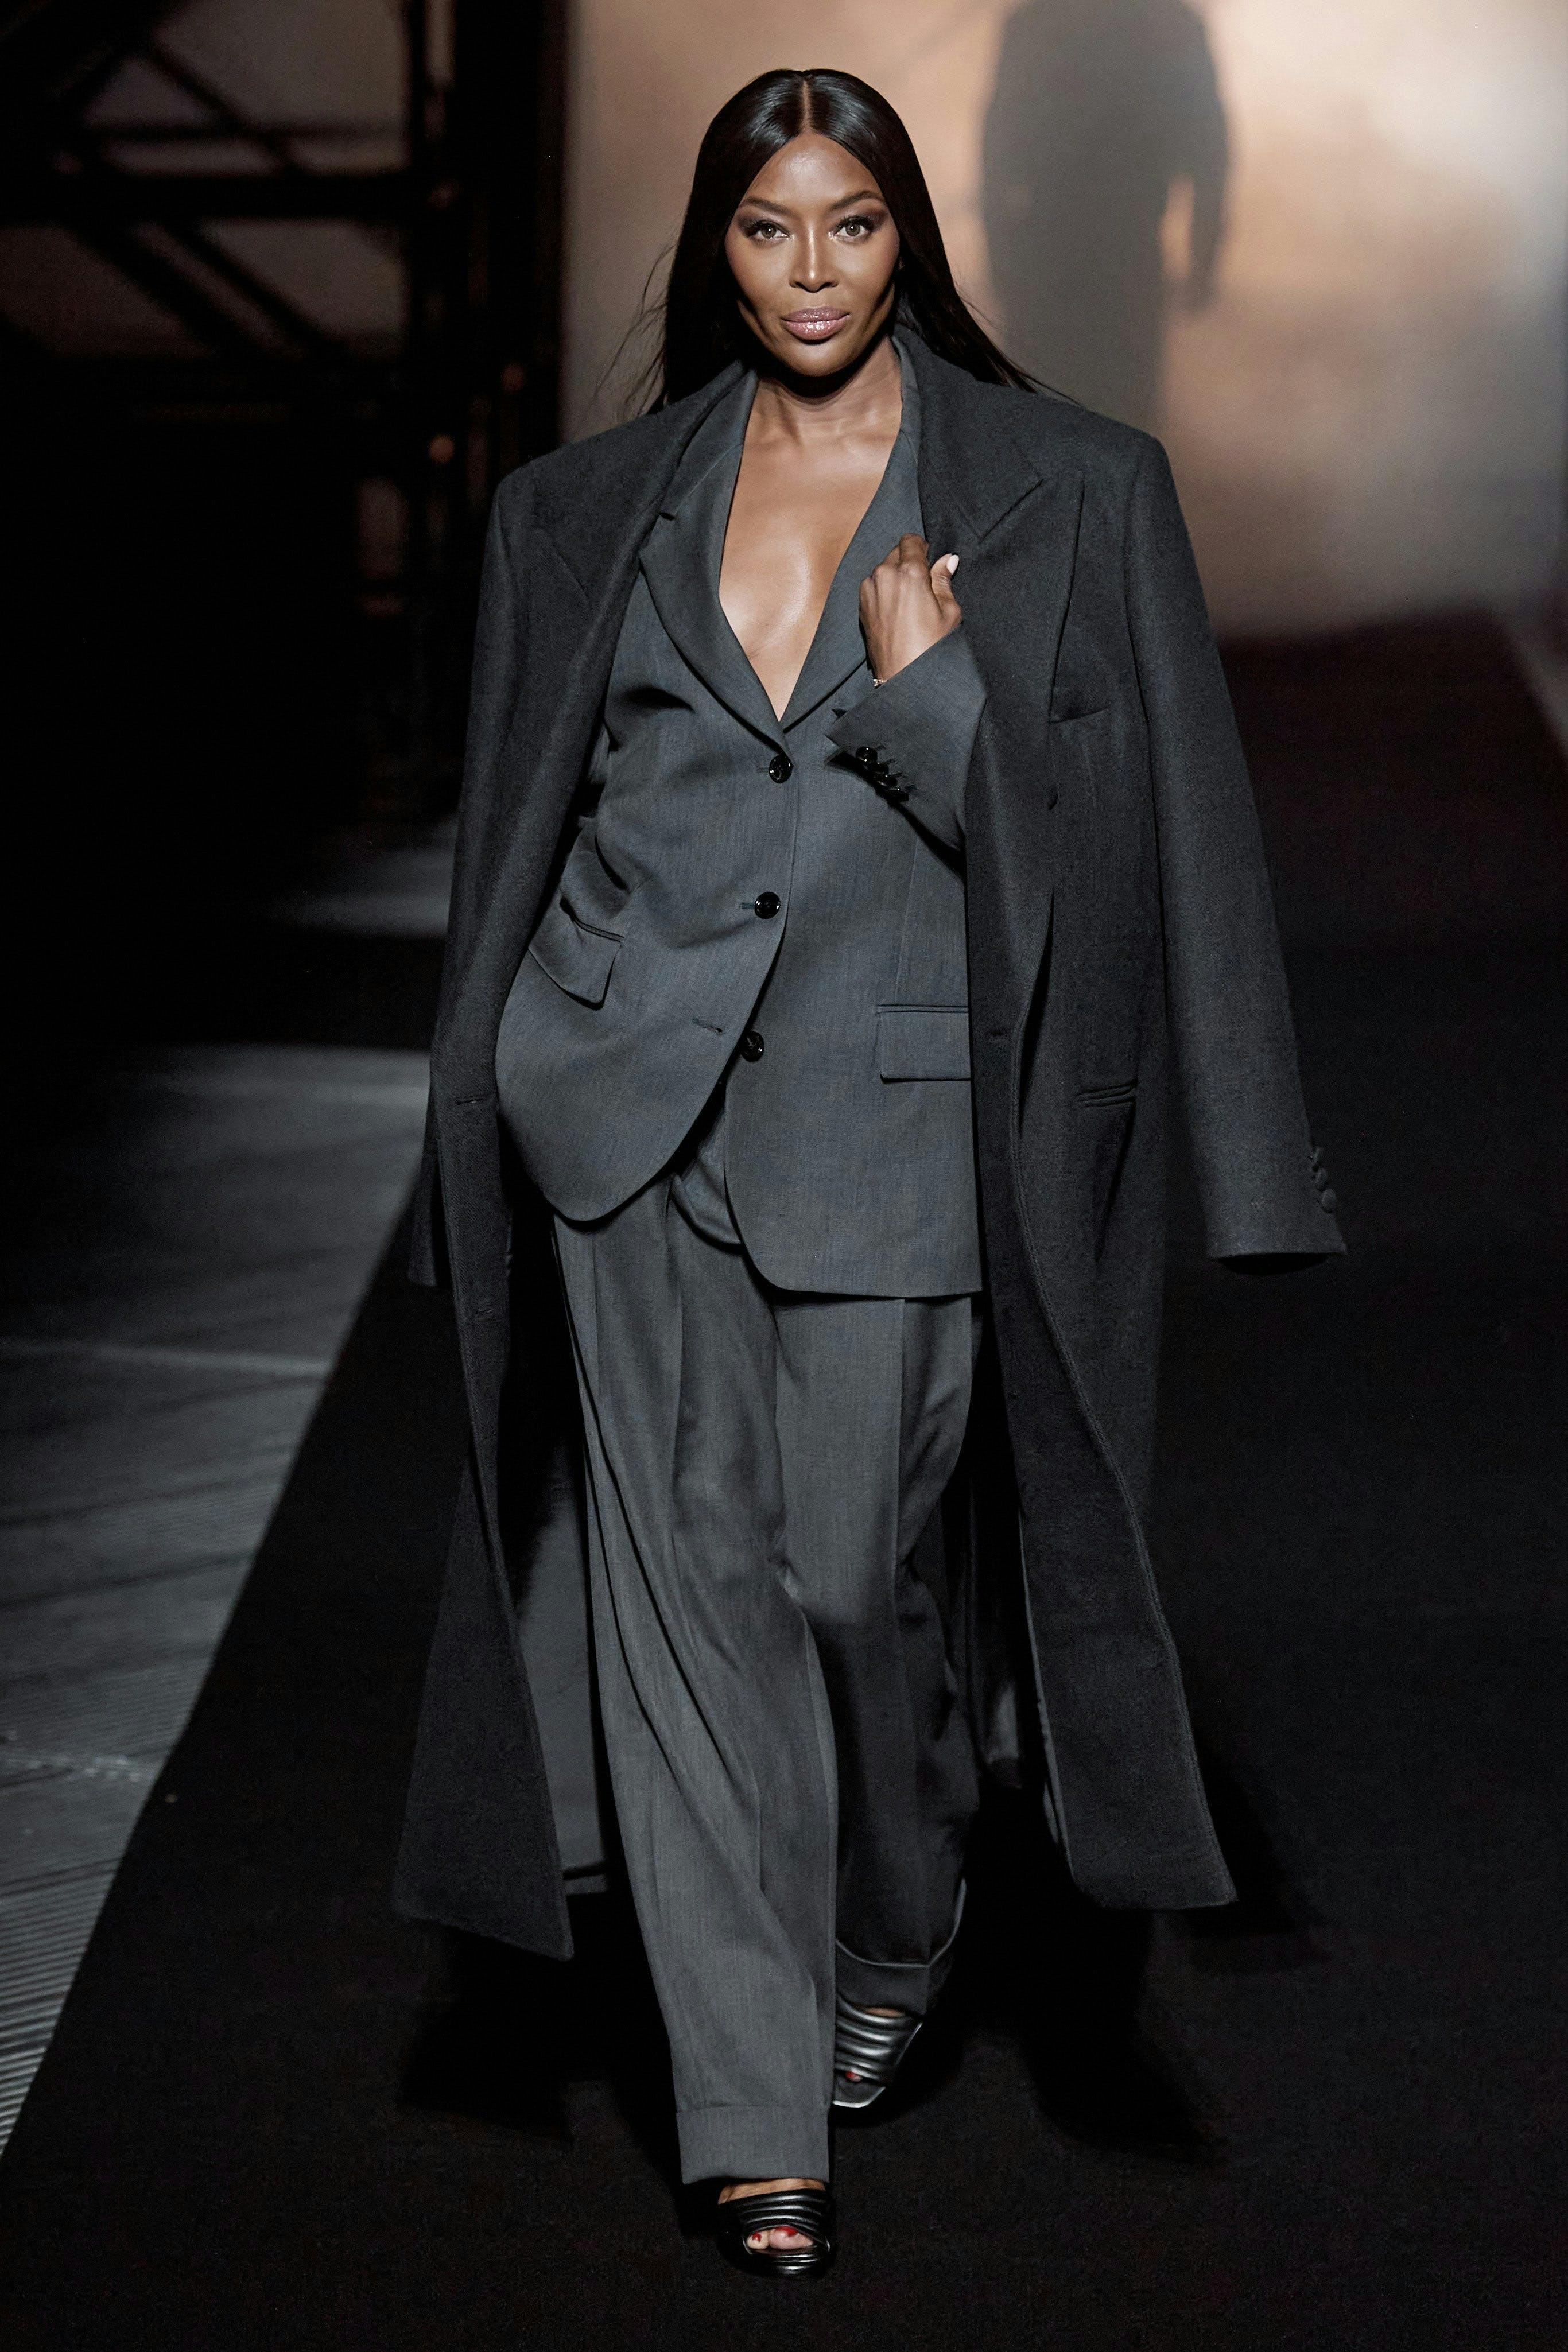 clothing apparel suit overcoat coat tuxedo female person dress woman